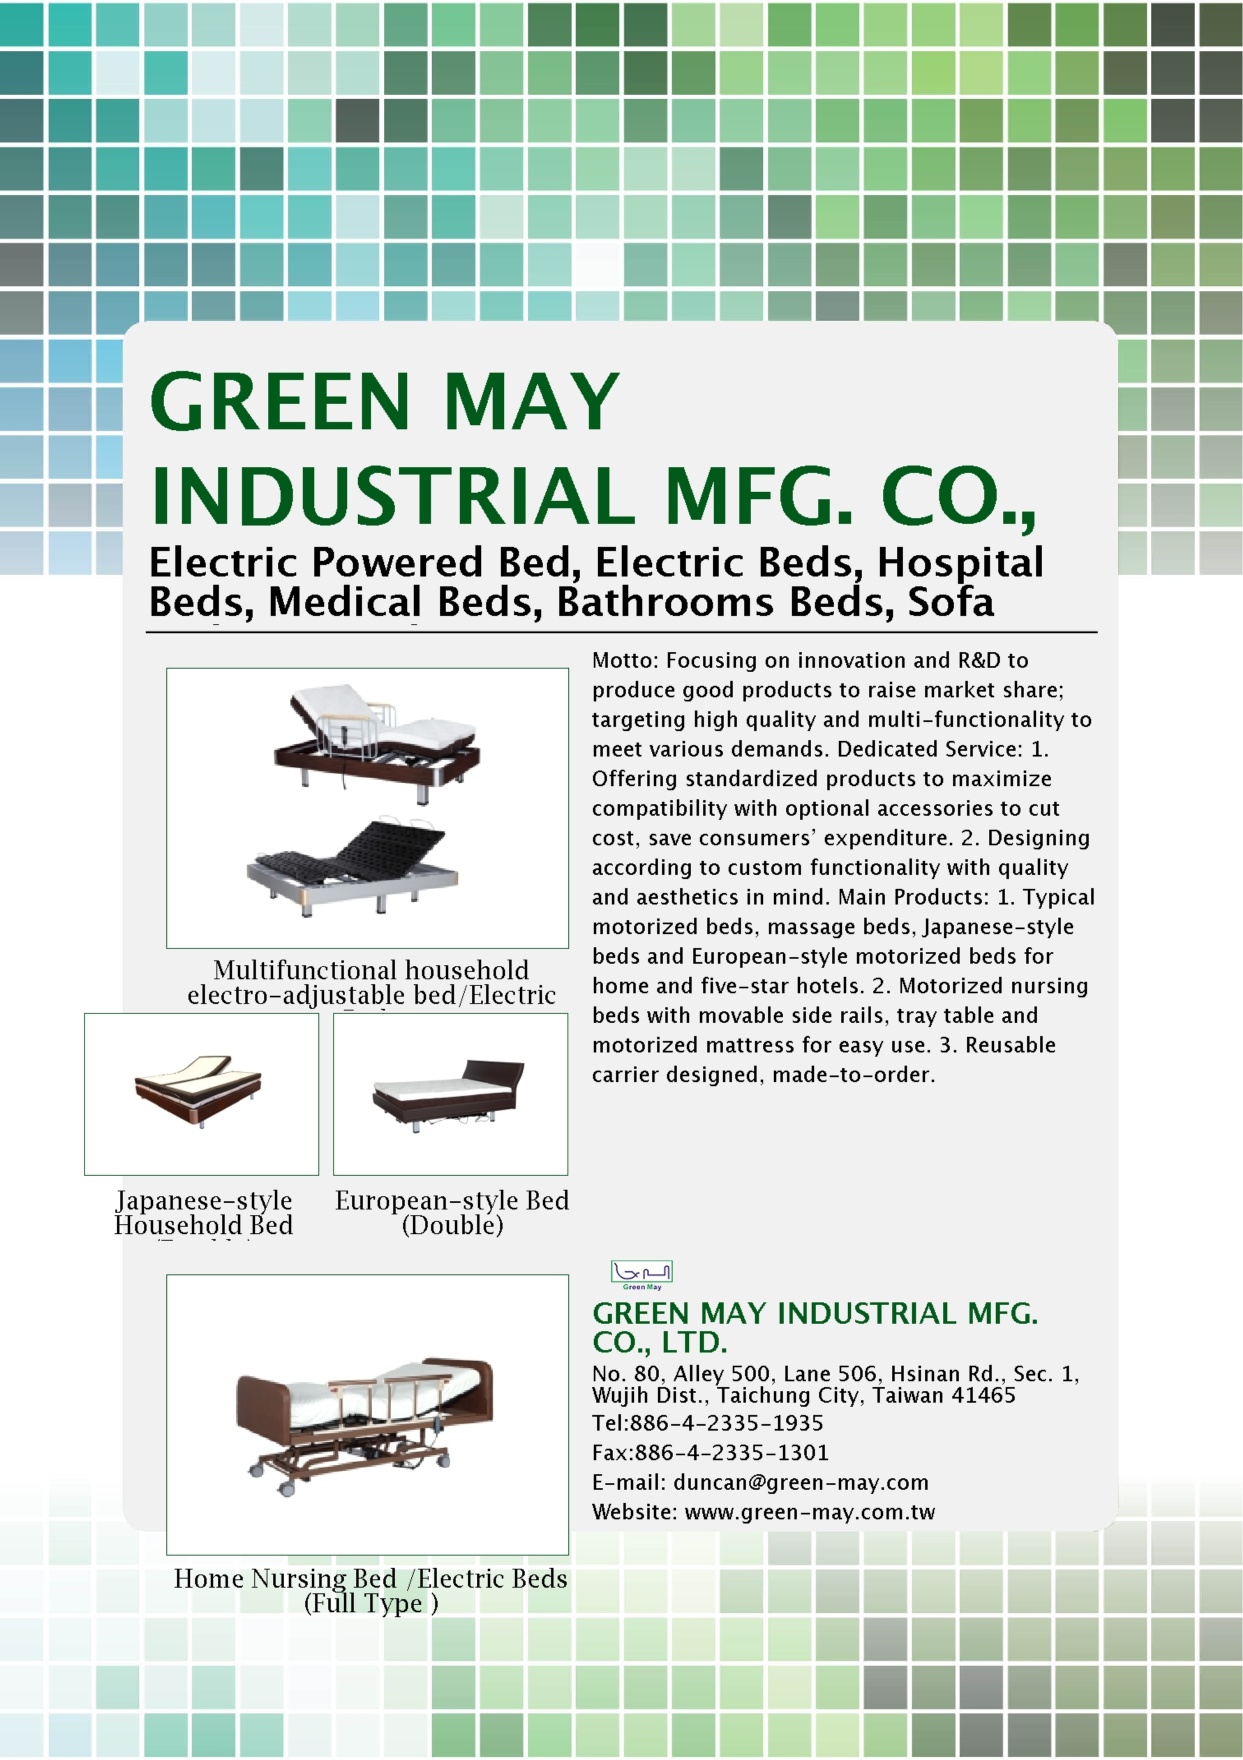 GREEN MAY INDUSTRIAL MFG. CO., LTD.